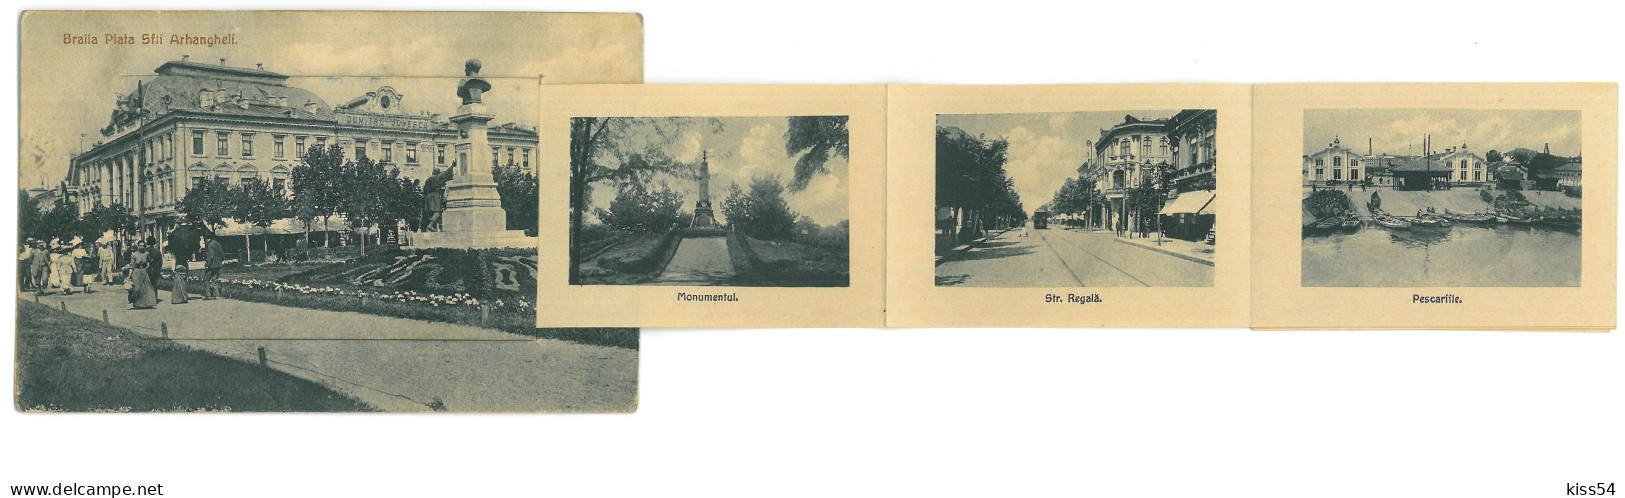 RO 83 - 22758 BRAILA, Leporello, Park, Traian Statue, Romania - Old Postcard +10 Mini Photocards - Used - 1913 - Rumänien